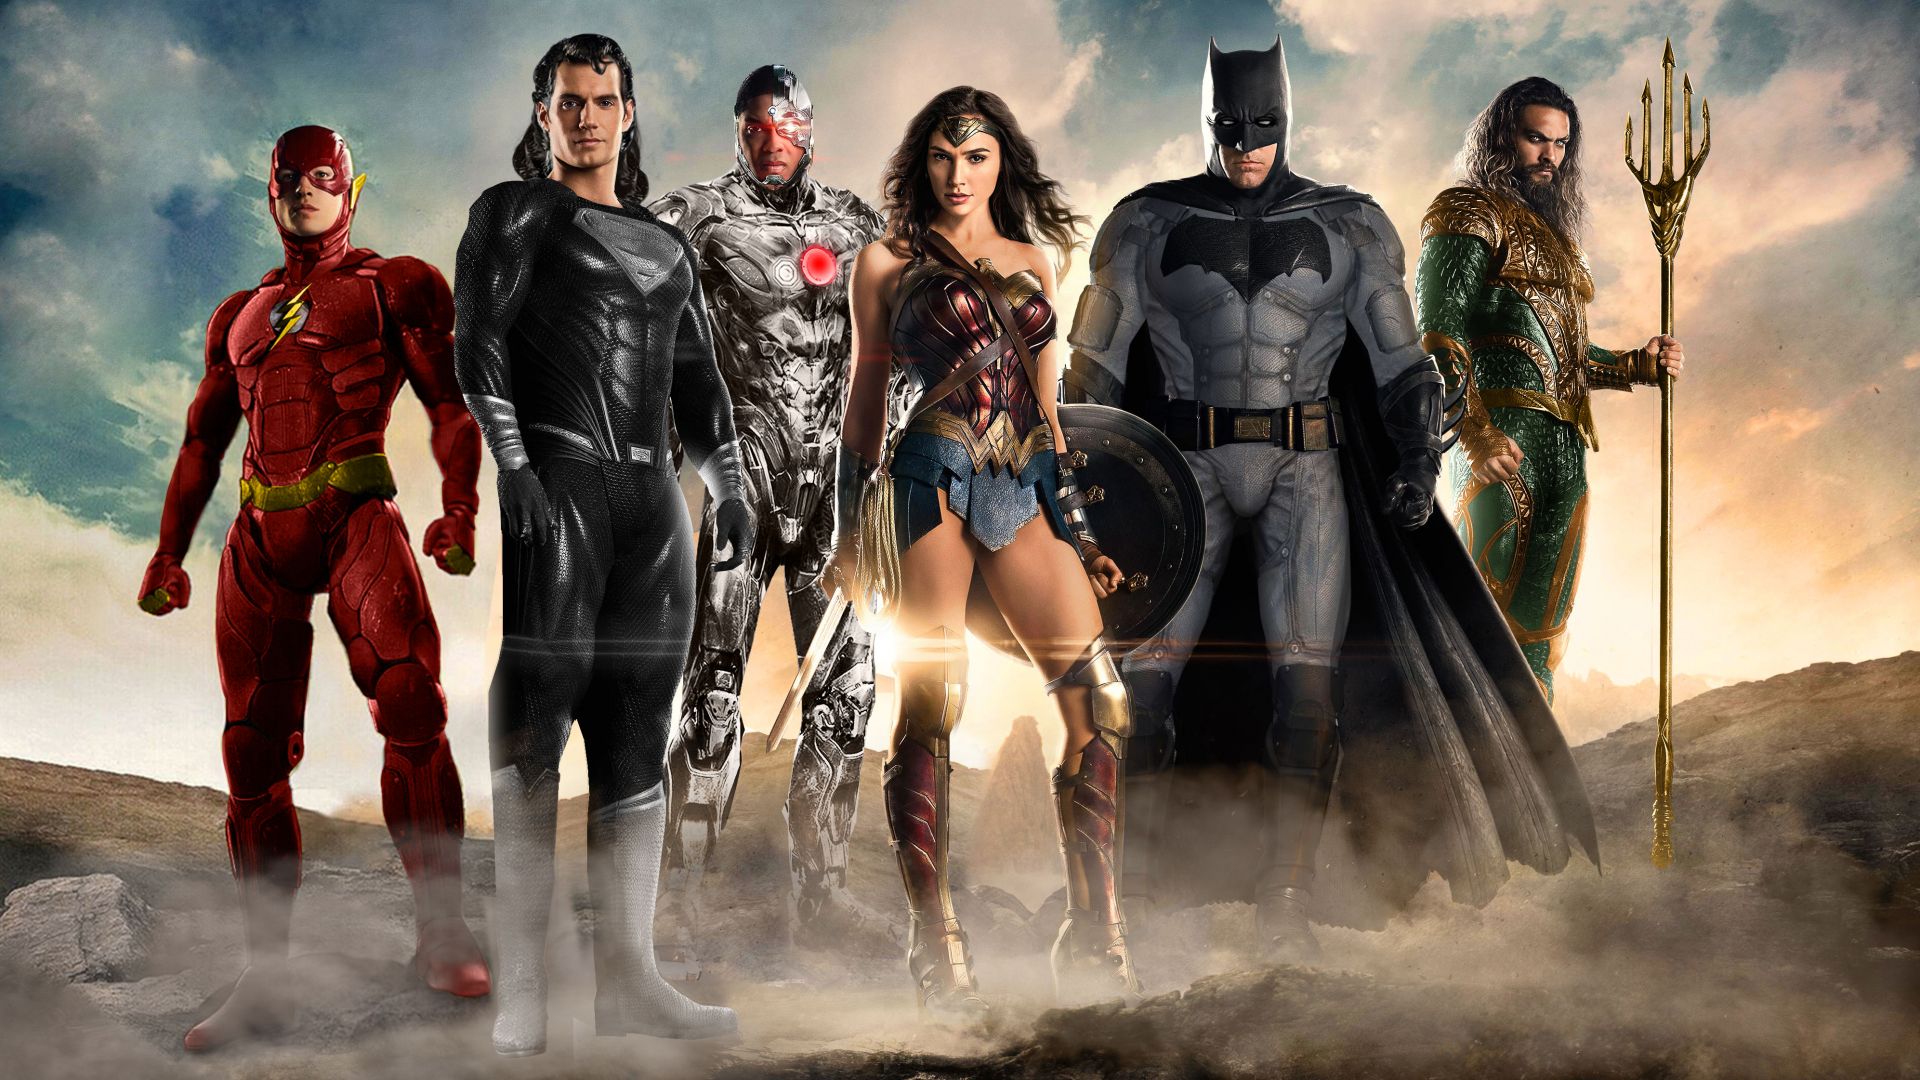 Лига справедливости, супермен, бэтмен, , Чудо женщина, супергерои, Justice League, superman, batman, Wonder woman, superhero (horizontal)